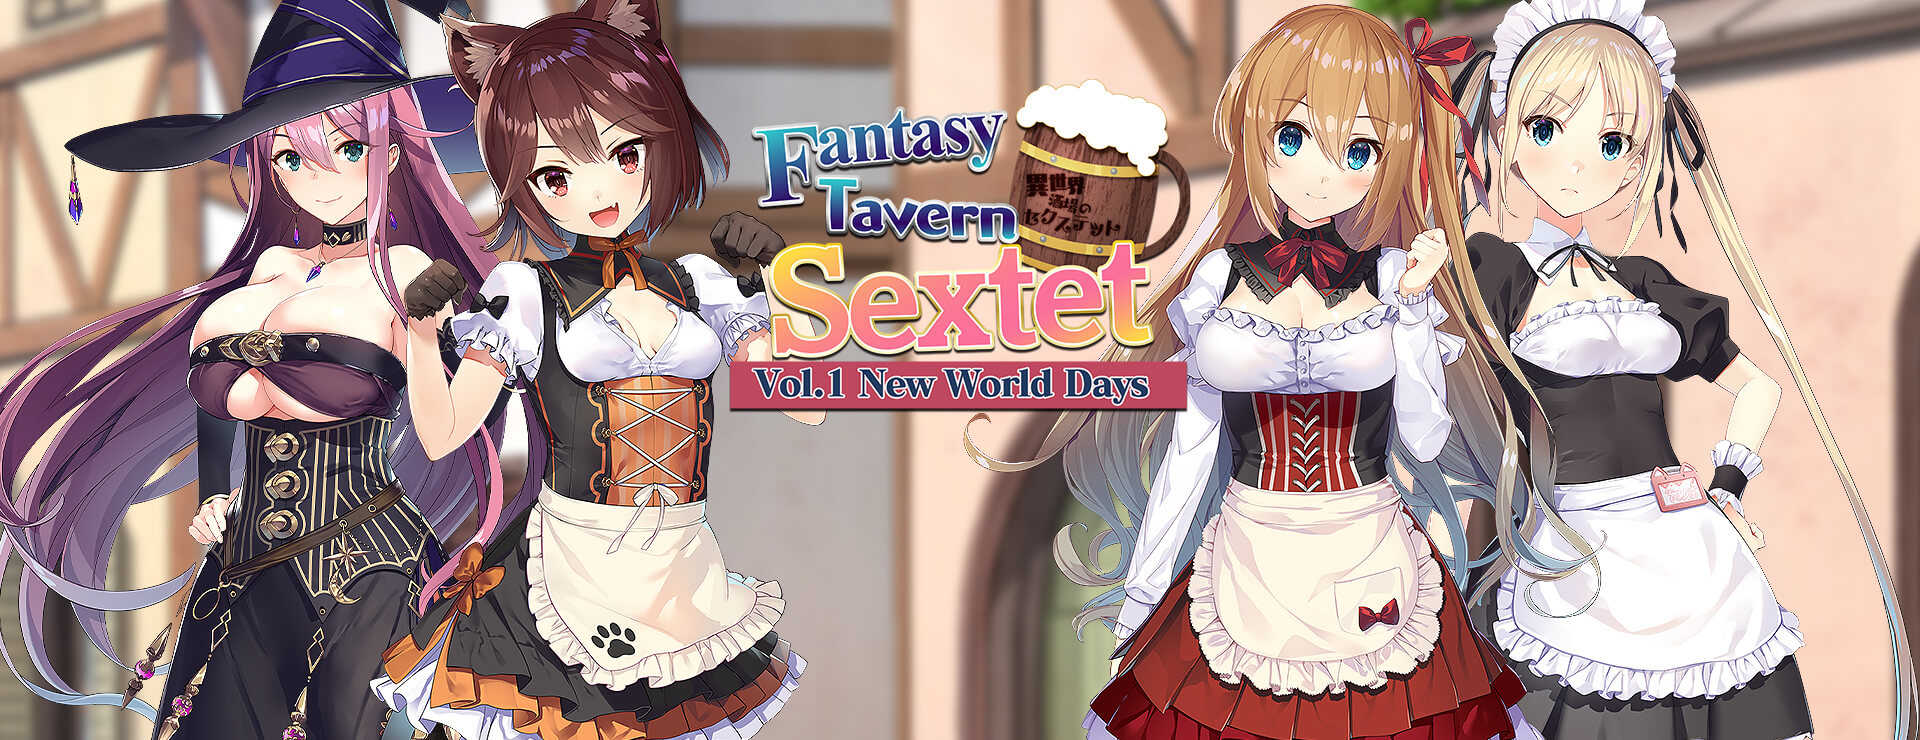 Fantasy Tavern Sextet - Vol.1 New World Days - 虚拟小说 遊戲